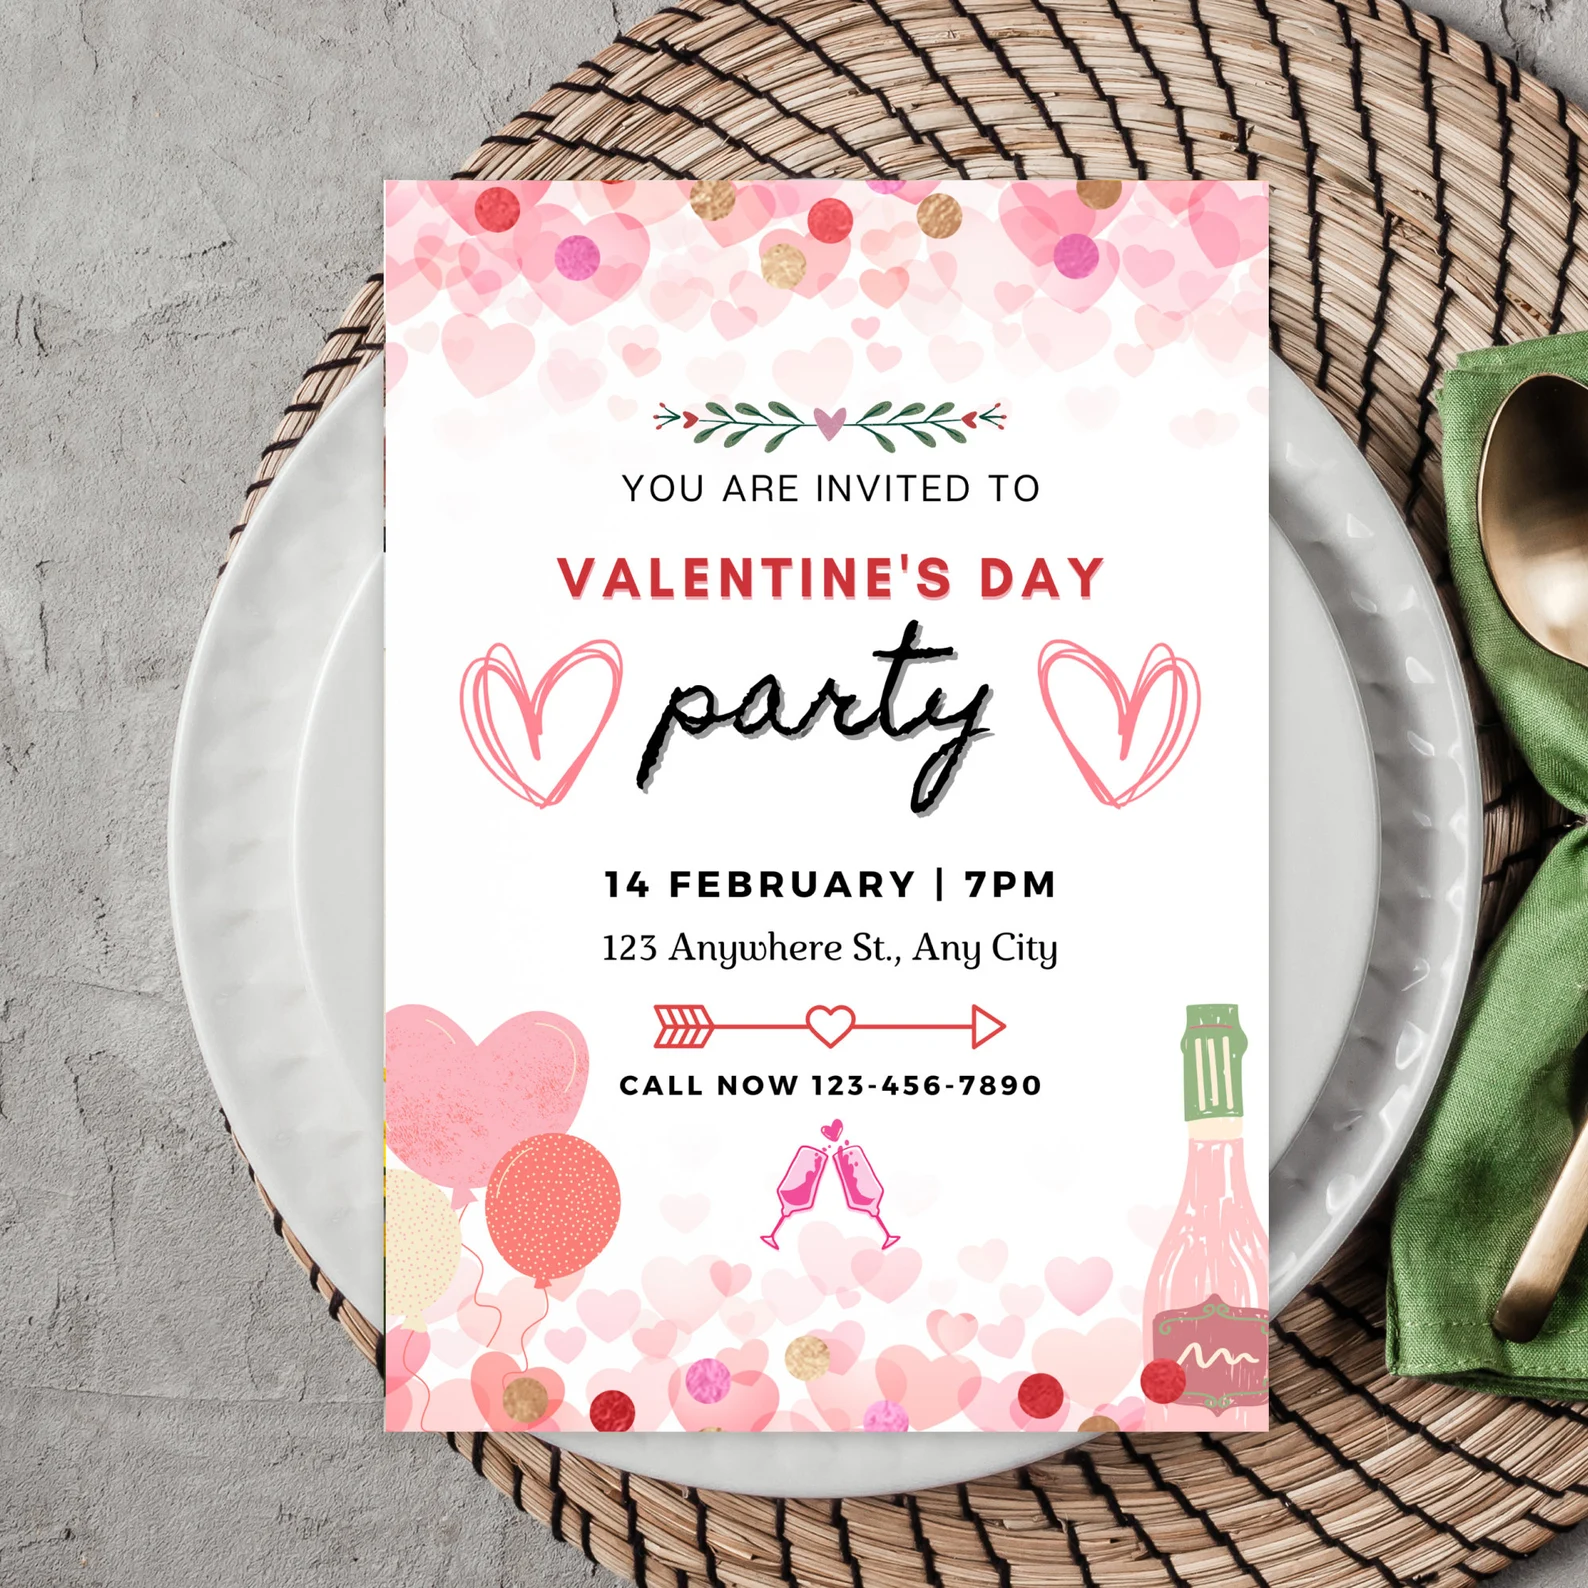 Valentines day digital card invite